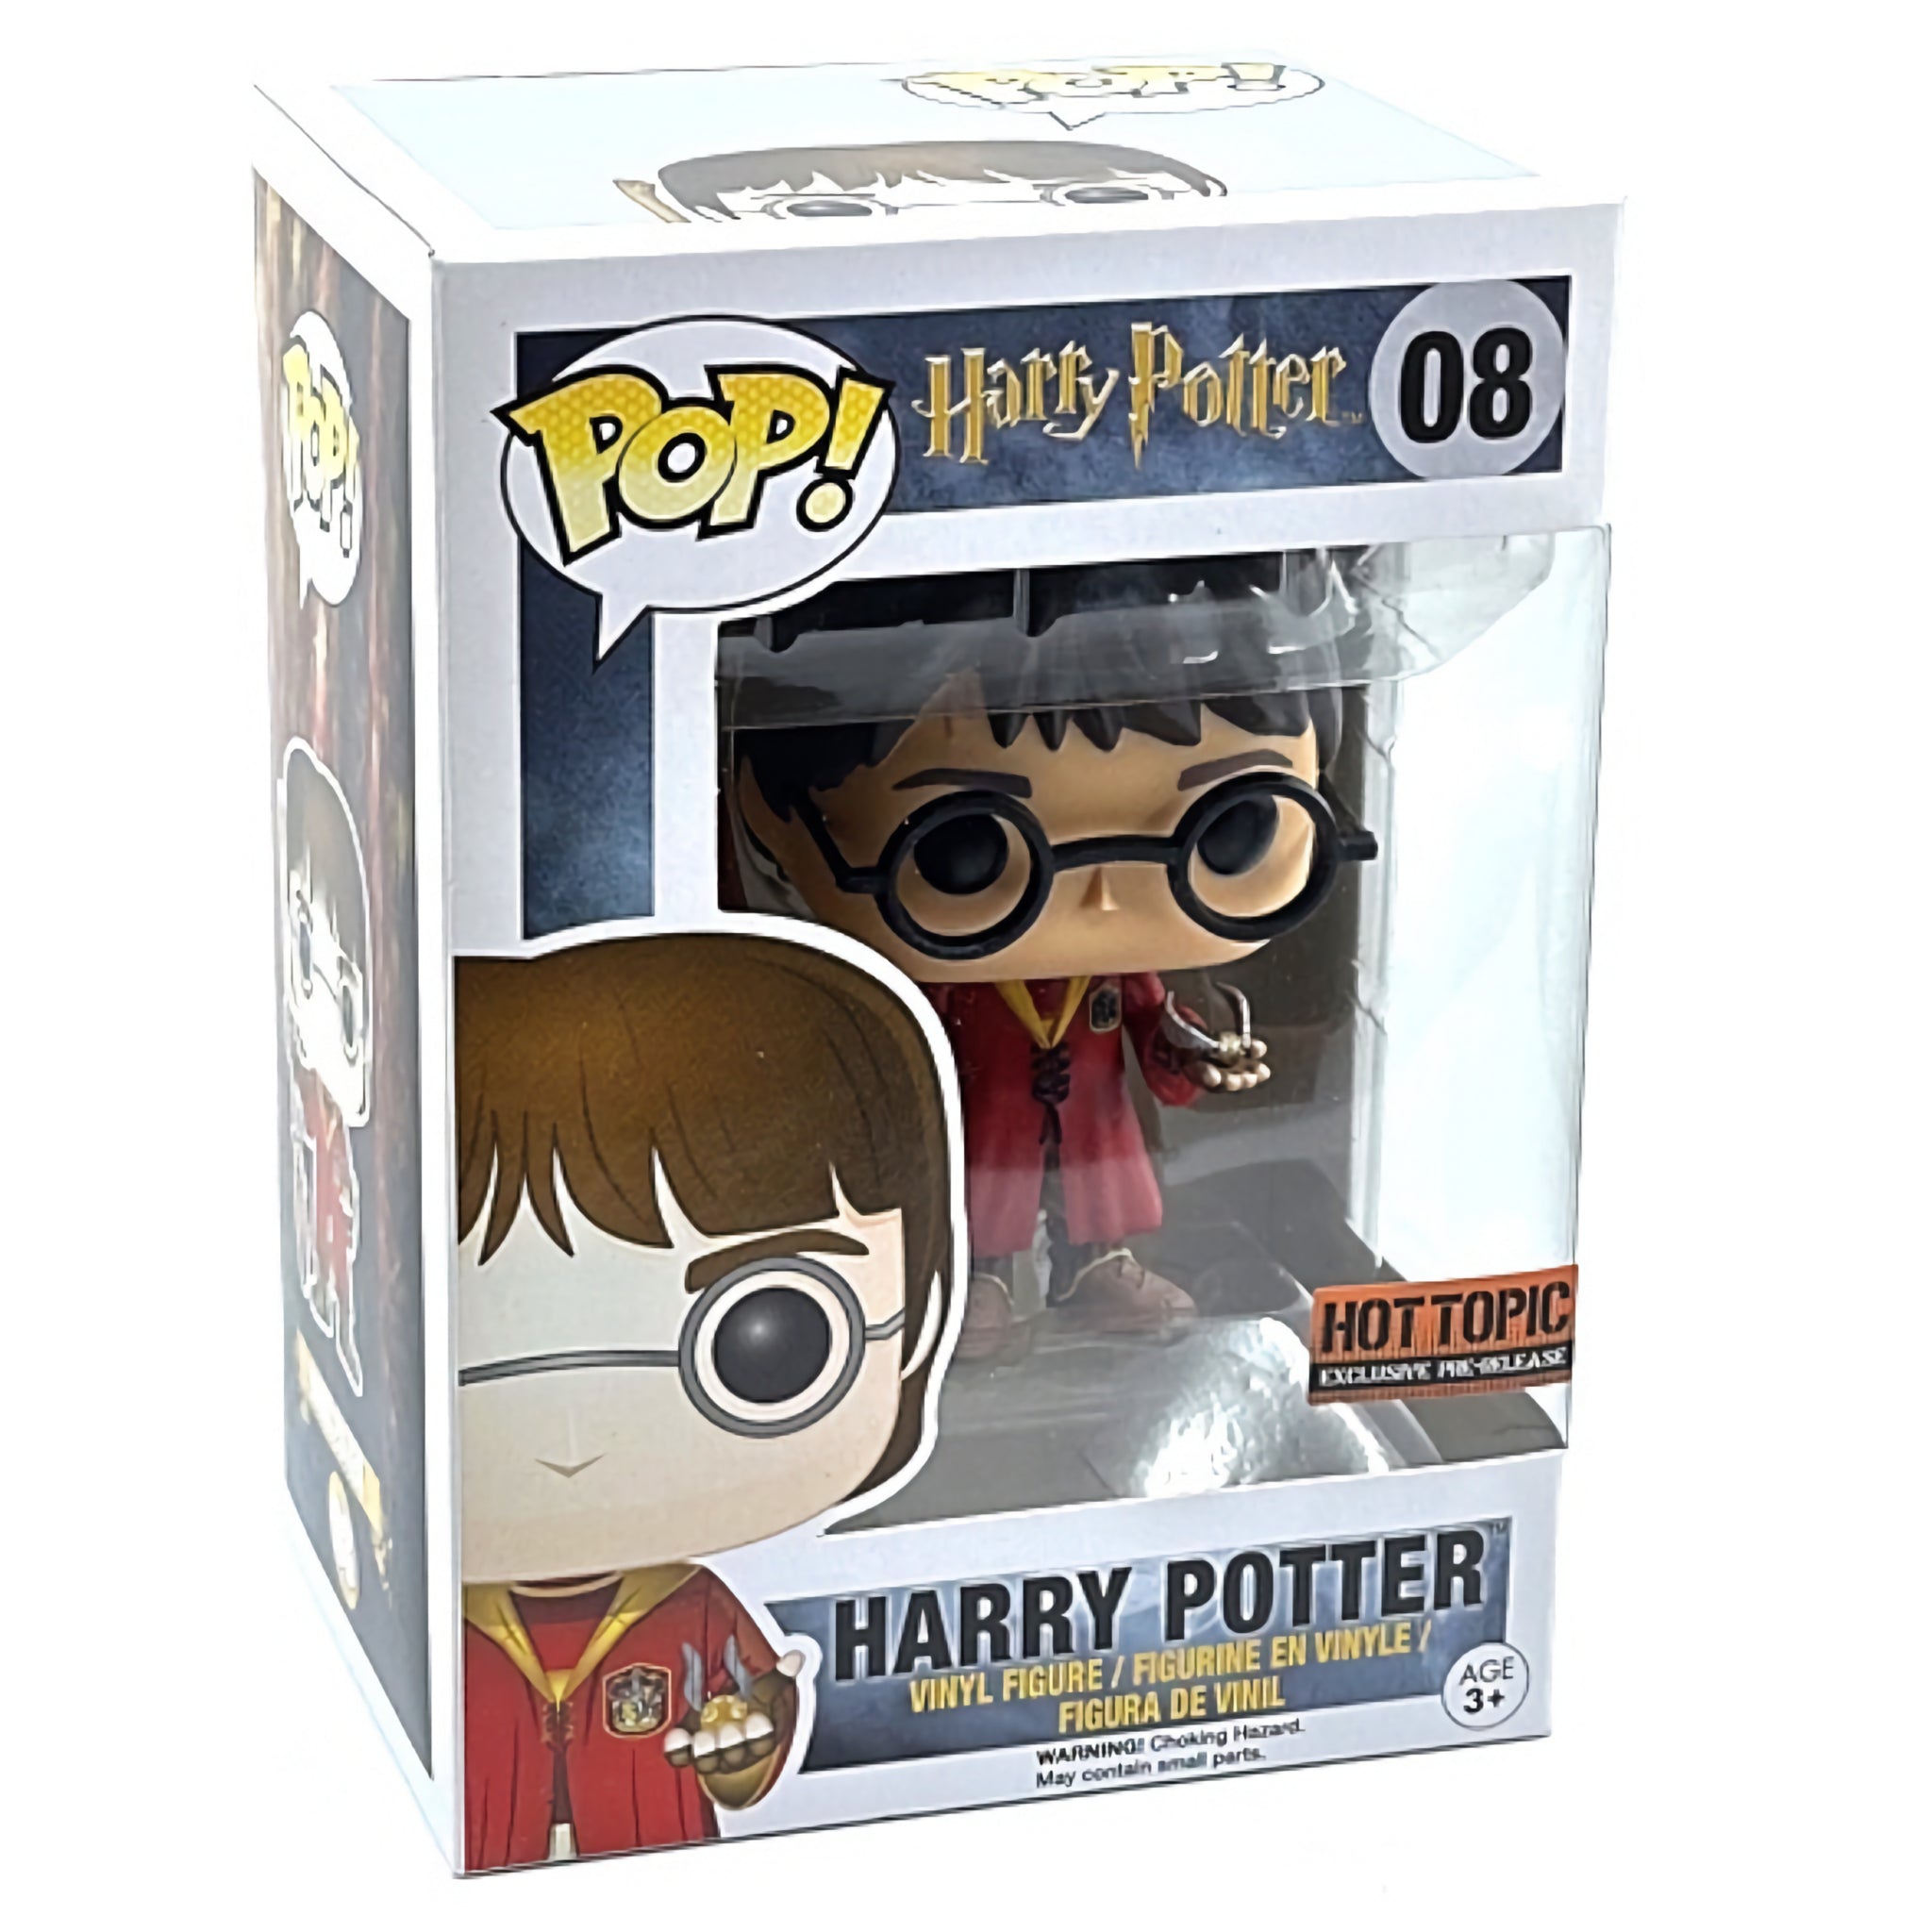 Harry Potter Funko Pop! HOT TOPIC EXCLUSIVE